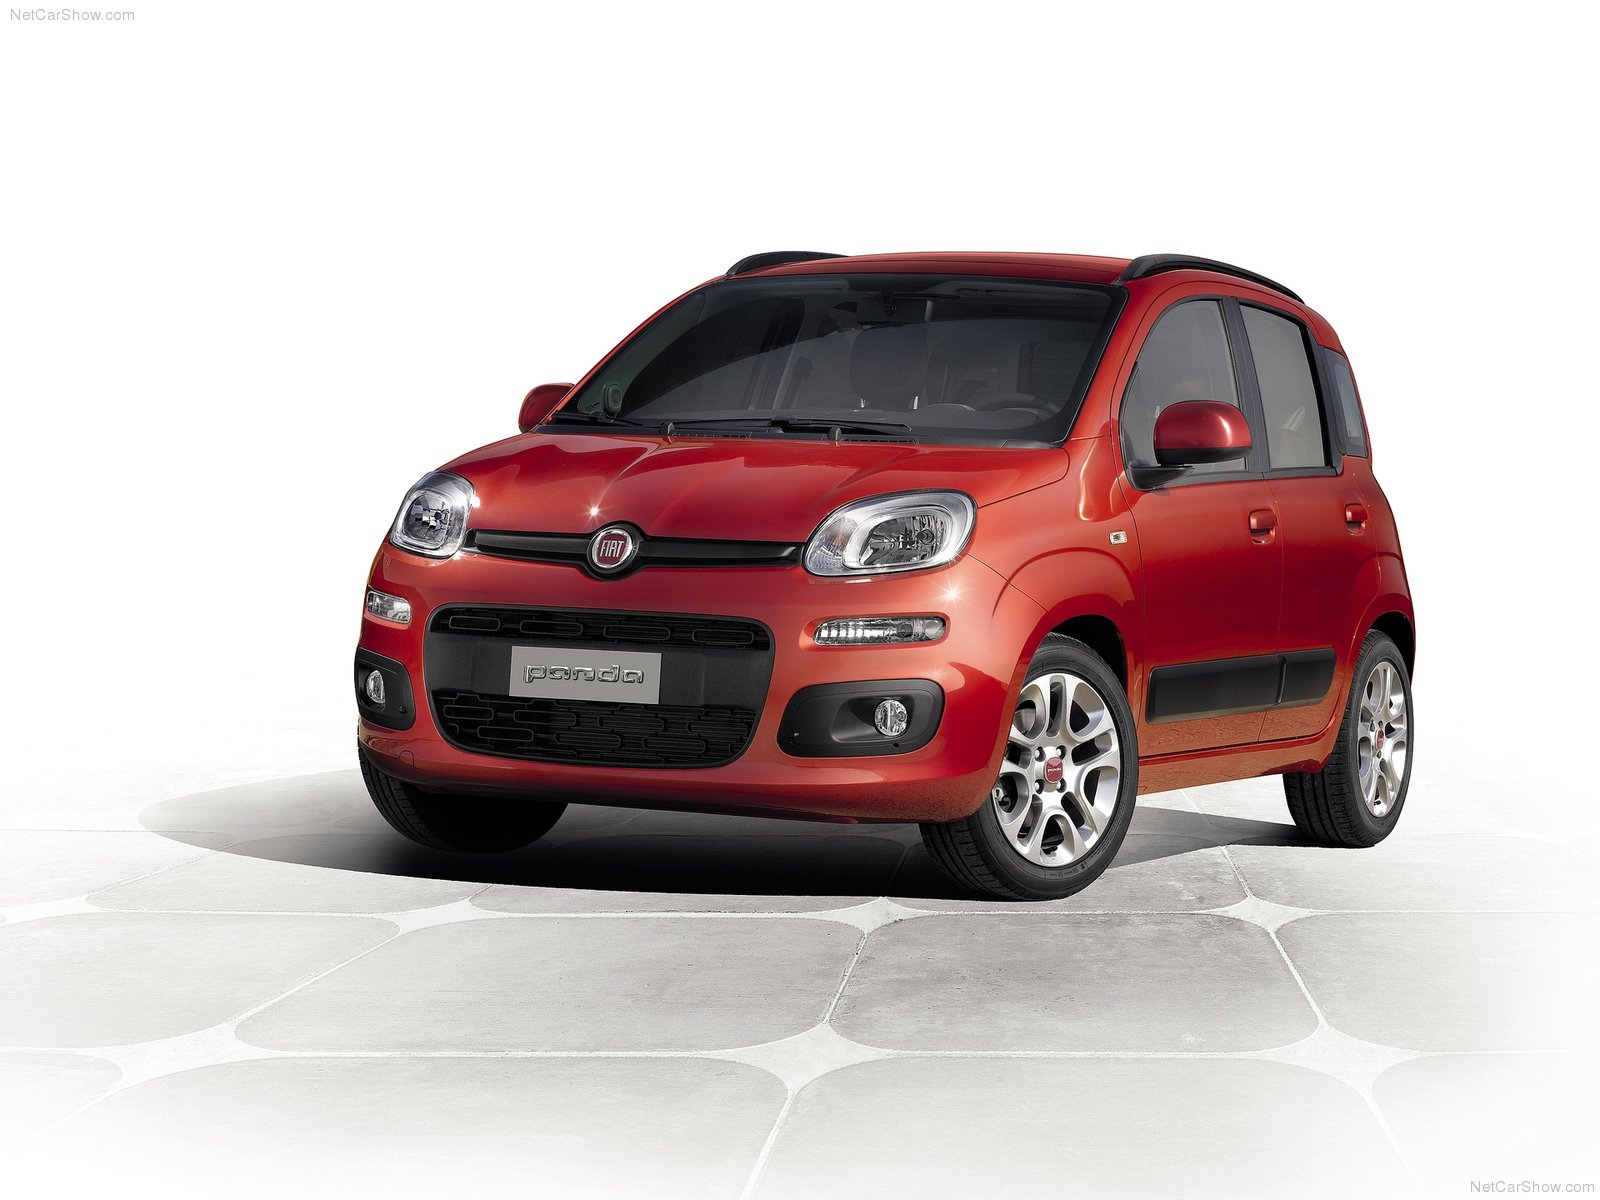 Novo Carro Fiat Panda 2013- Fotos,Preço,Características